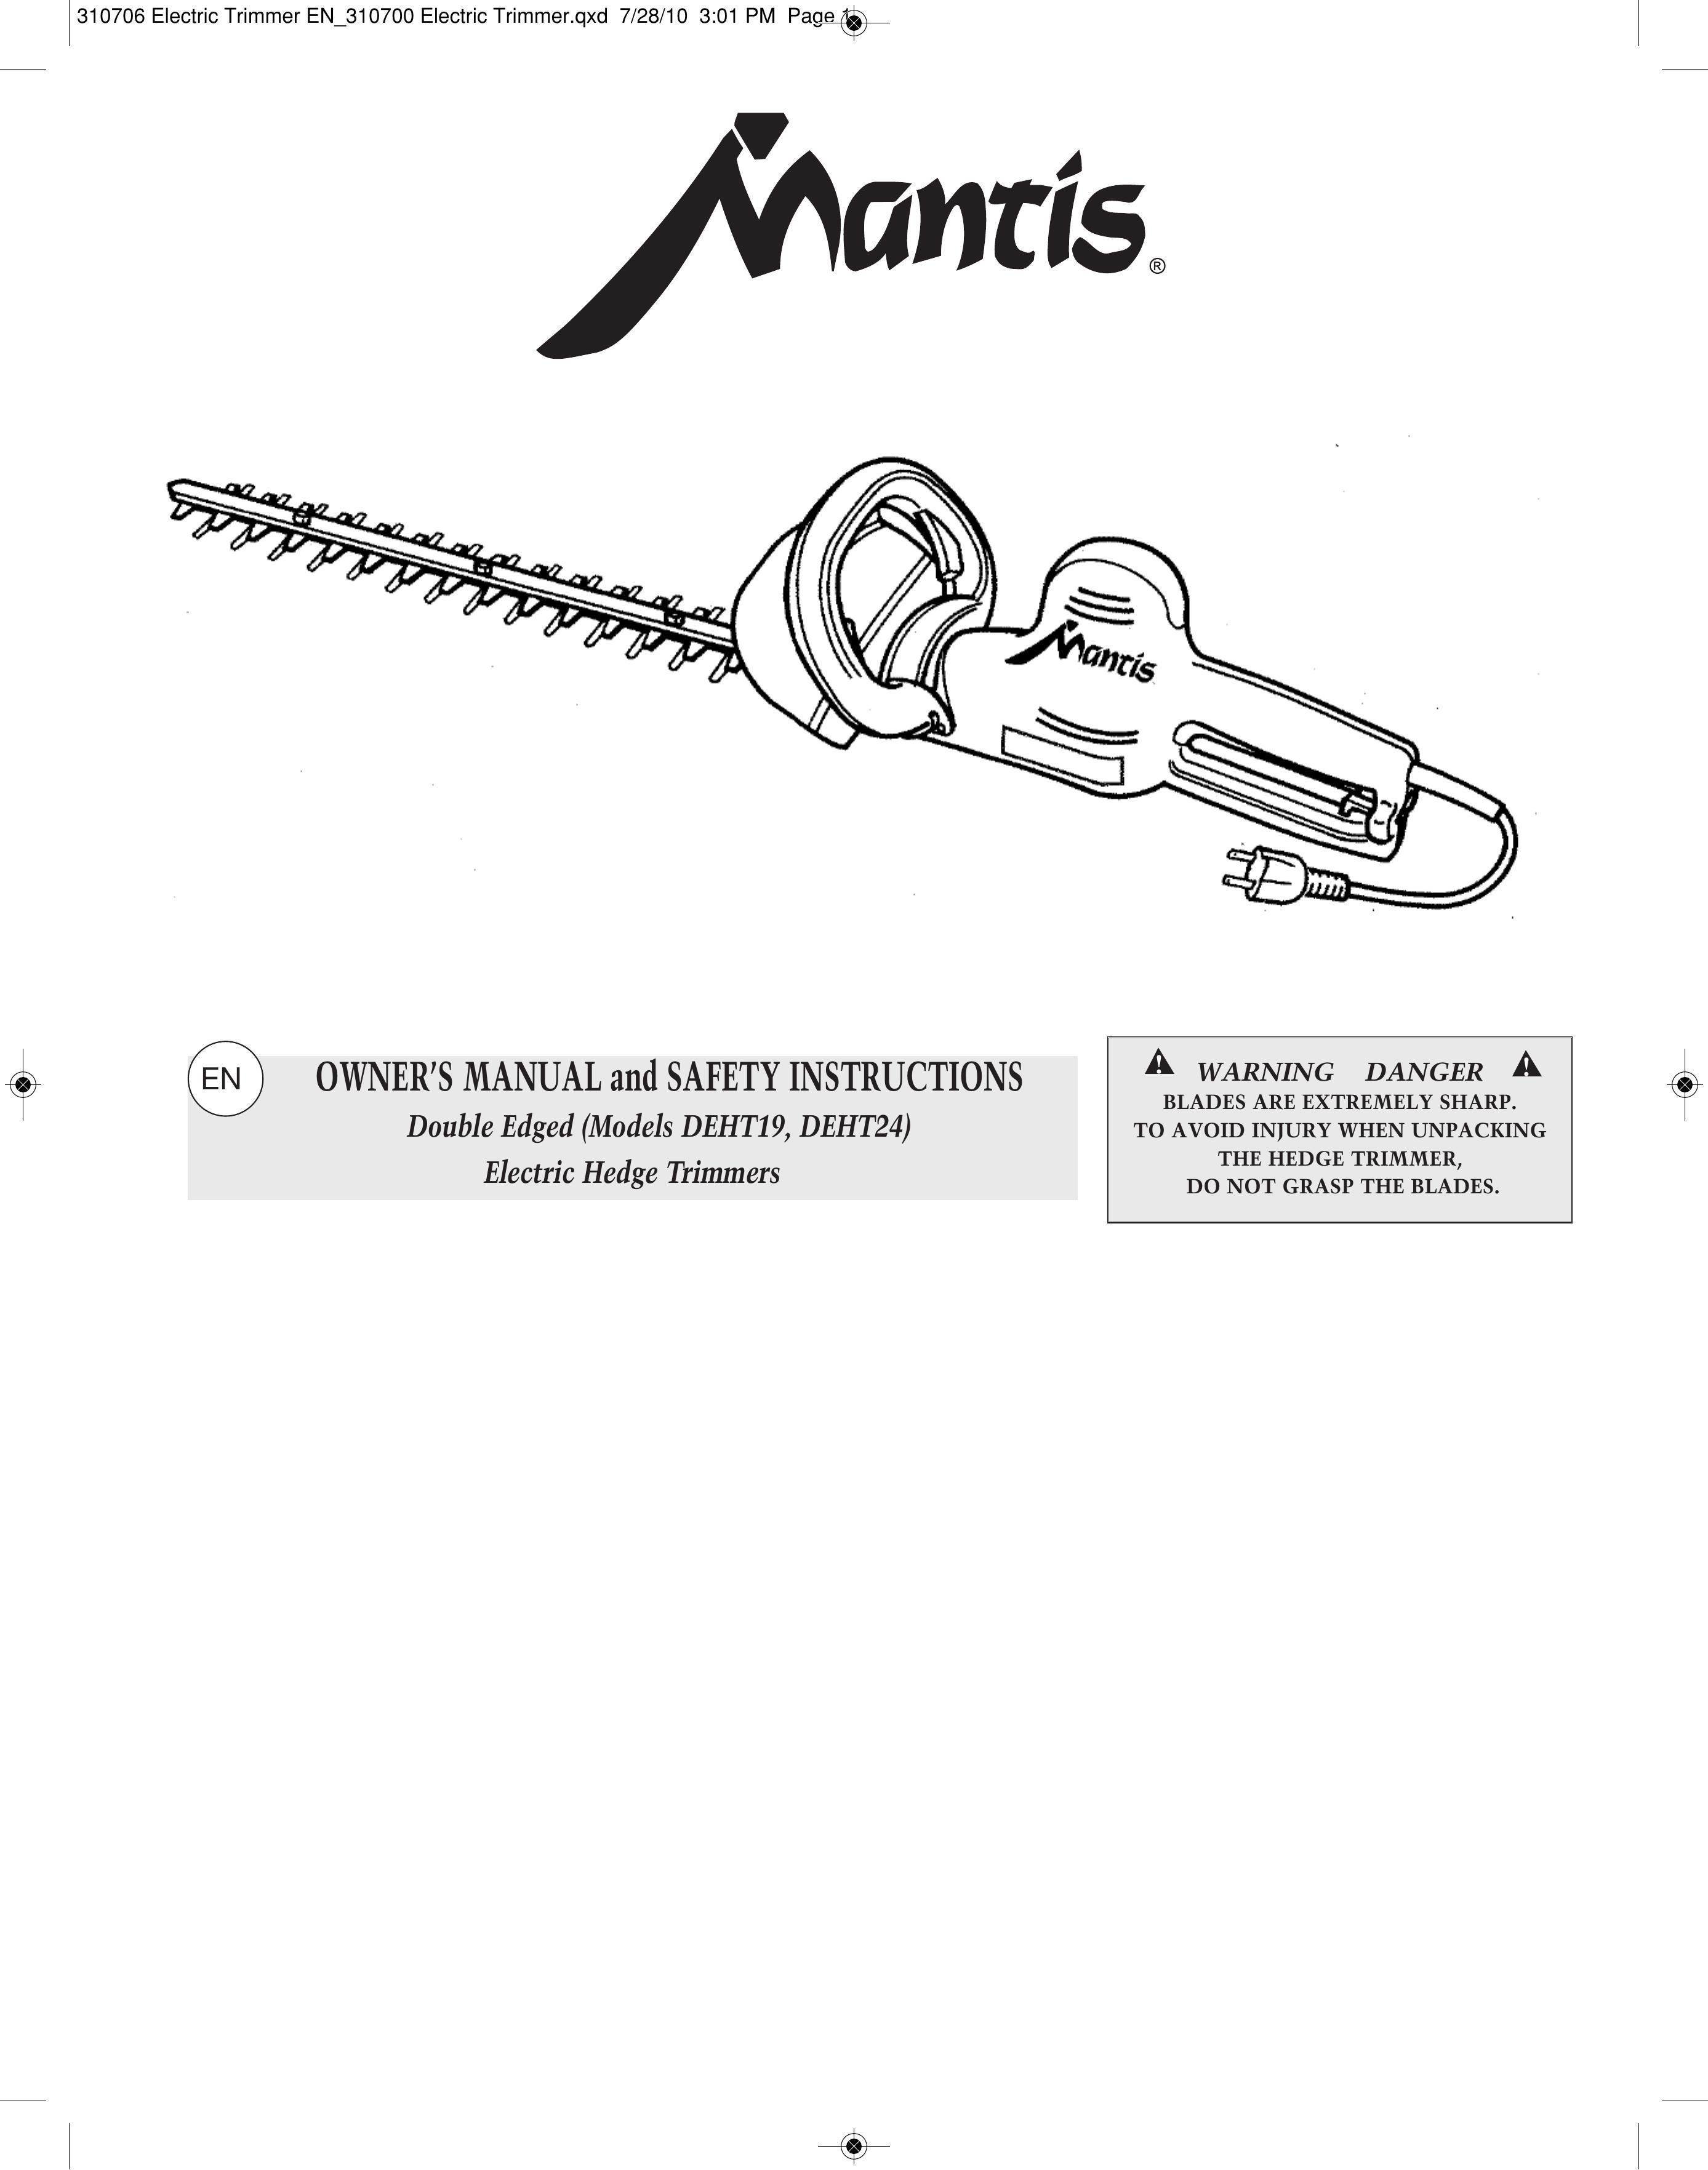 Mantis DEHT24 Trimmer User Manual